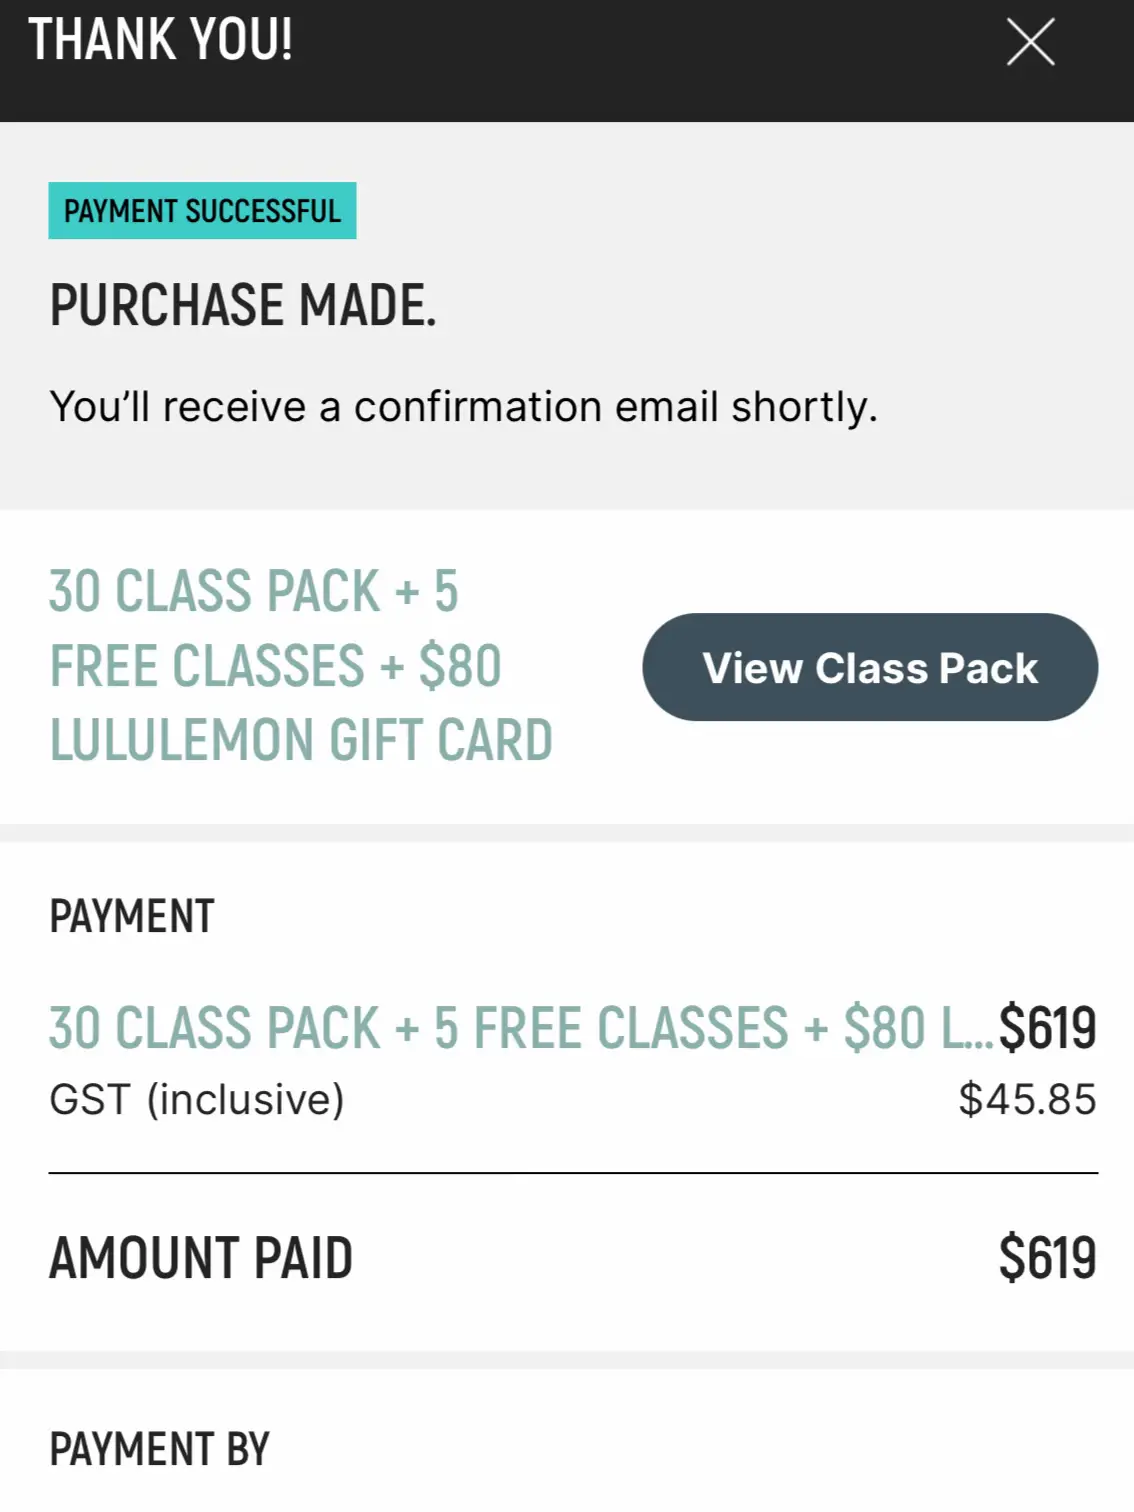 5 FREE classes + $80 lululemon Gift Card!